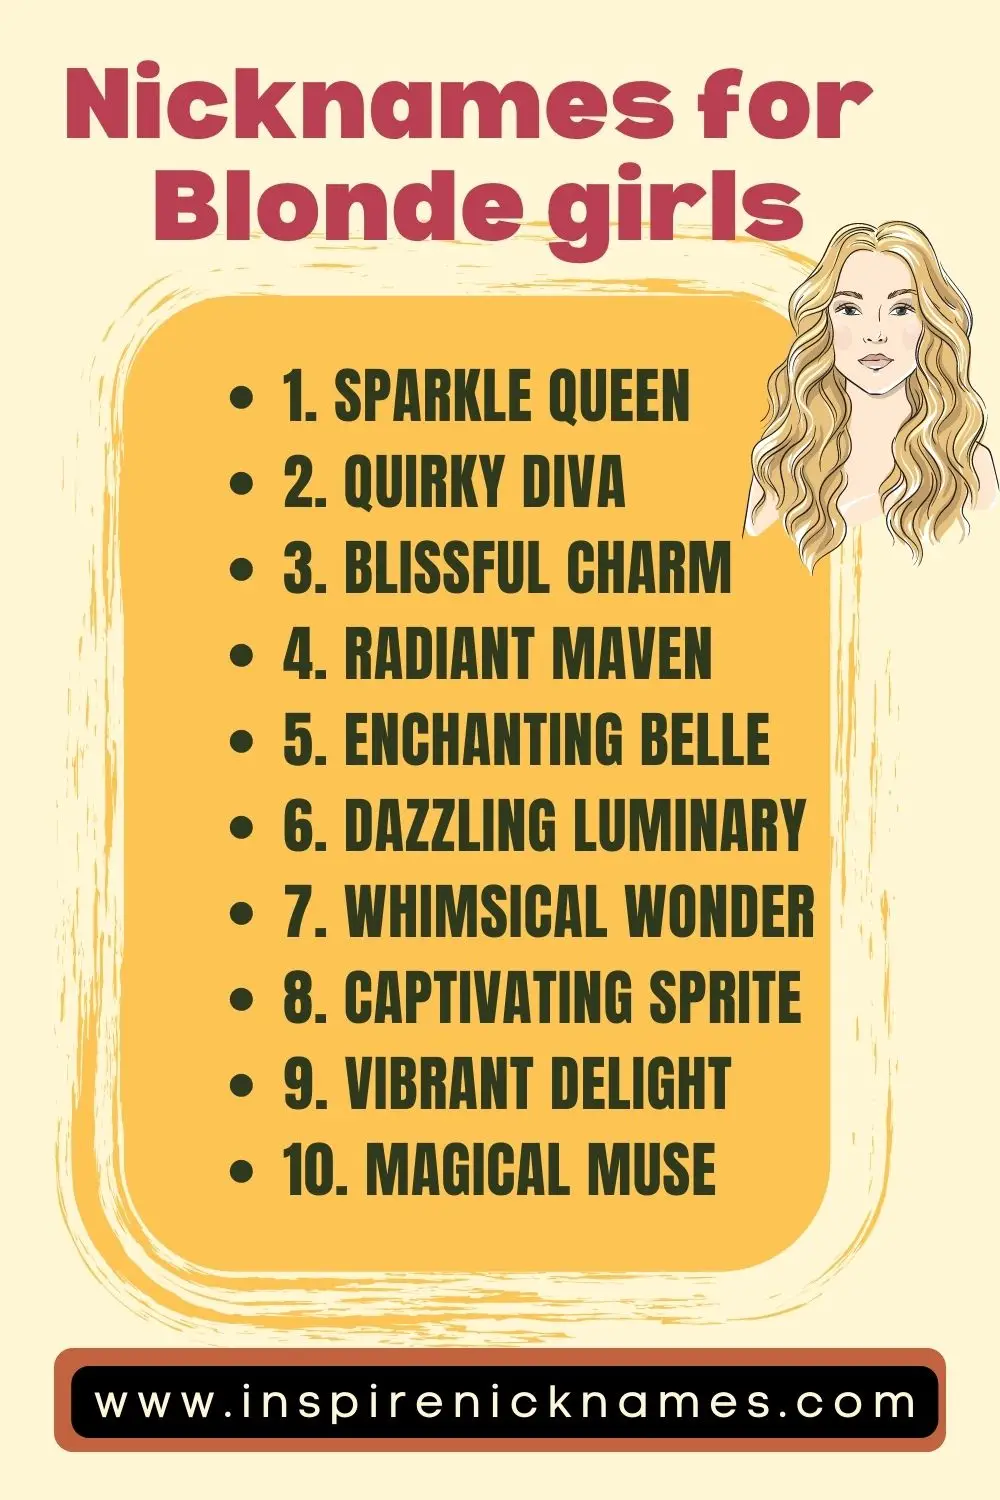 nicknames for blonde girls list ideas